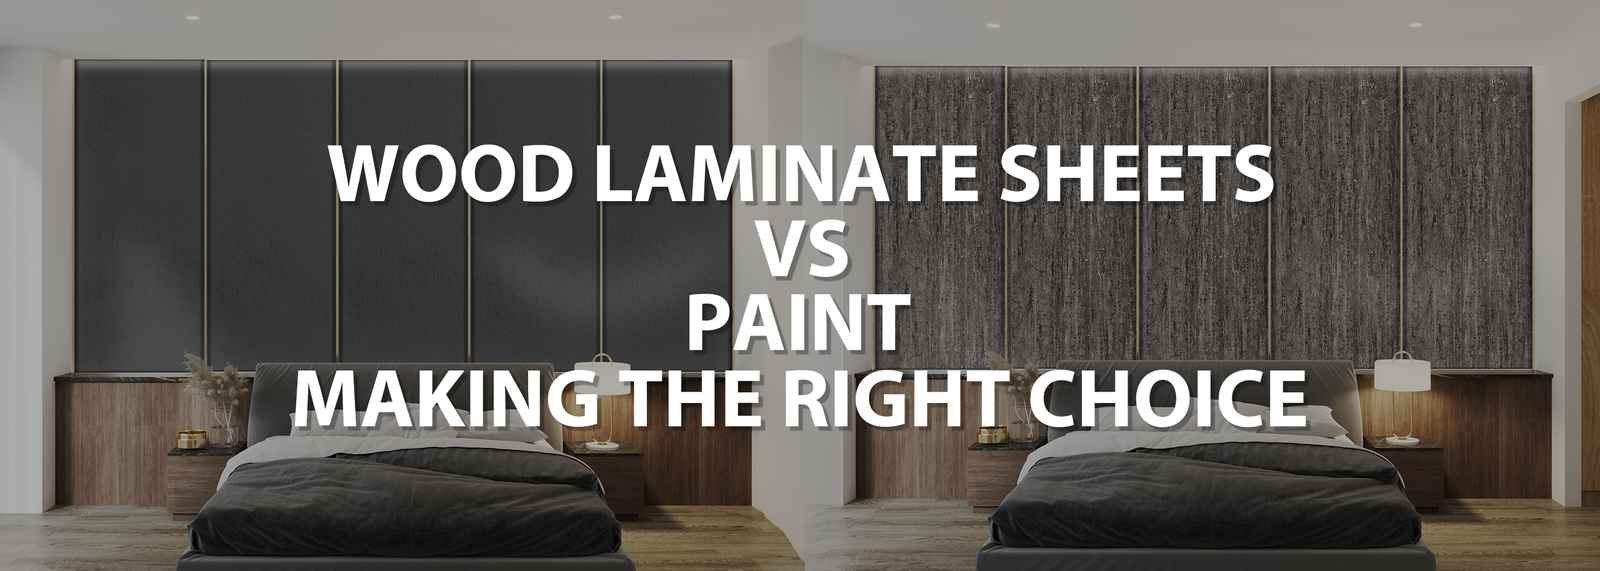 Wood Laminate Sheets vs. Paint